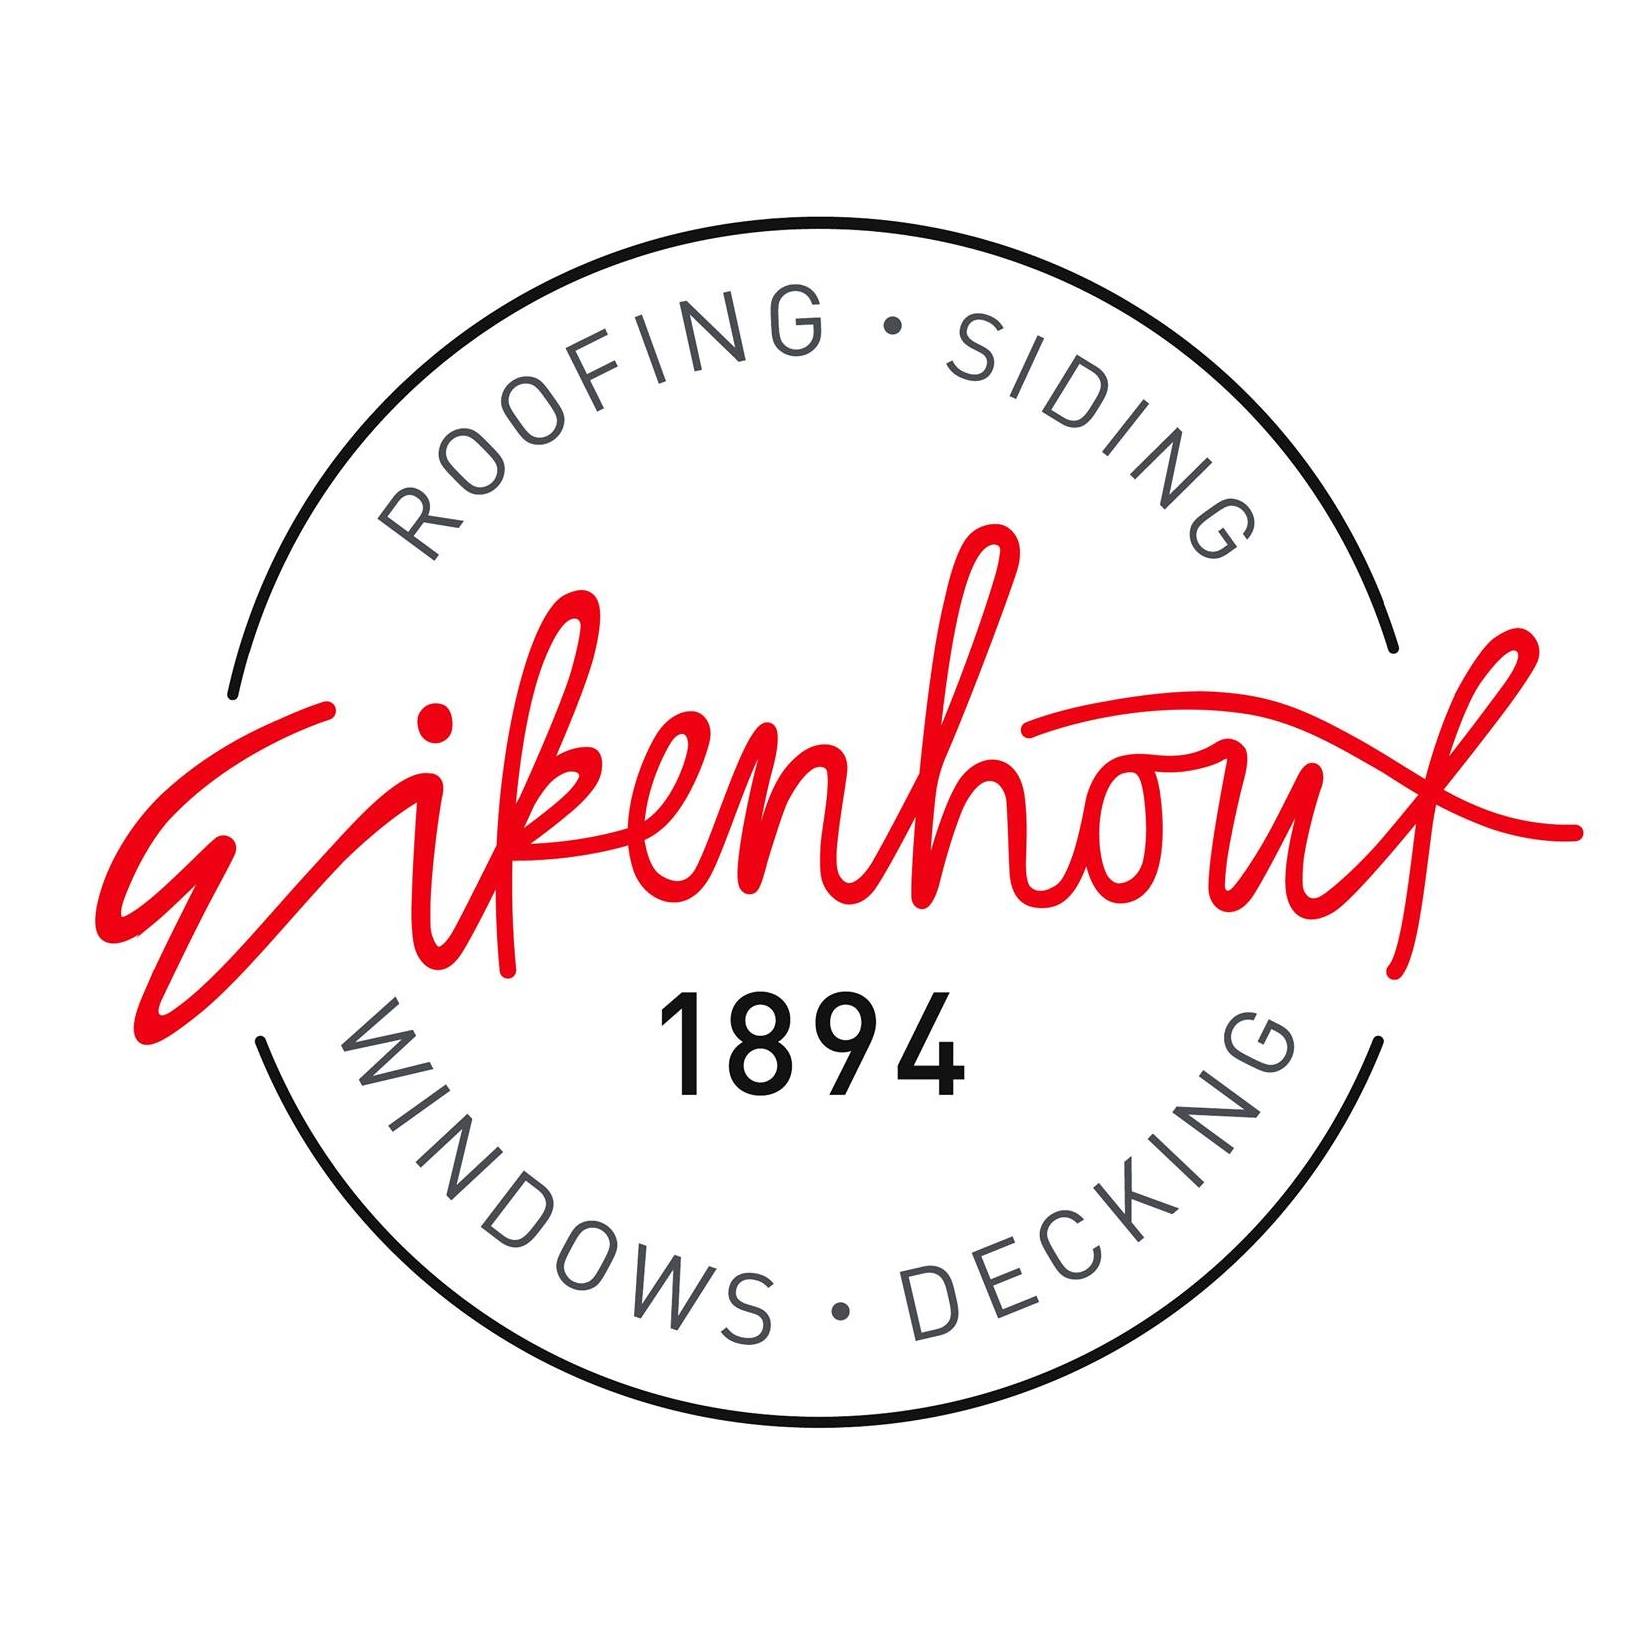 Eikenhout, Inc.